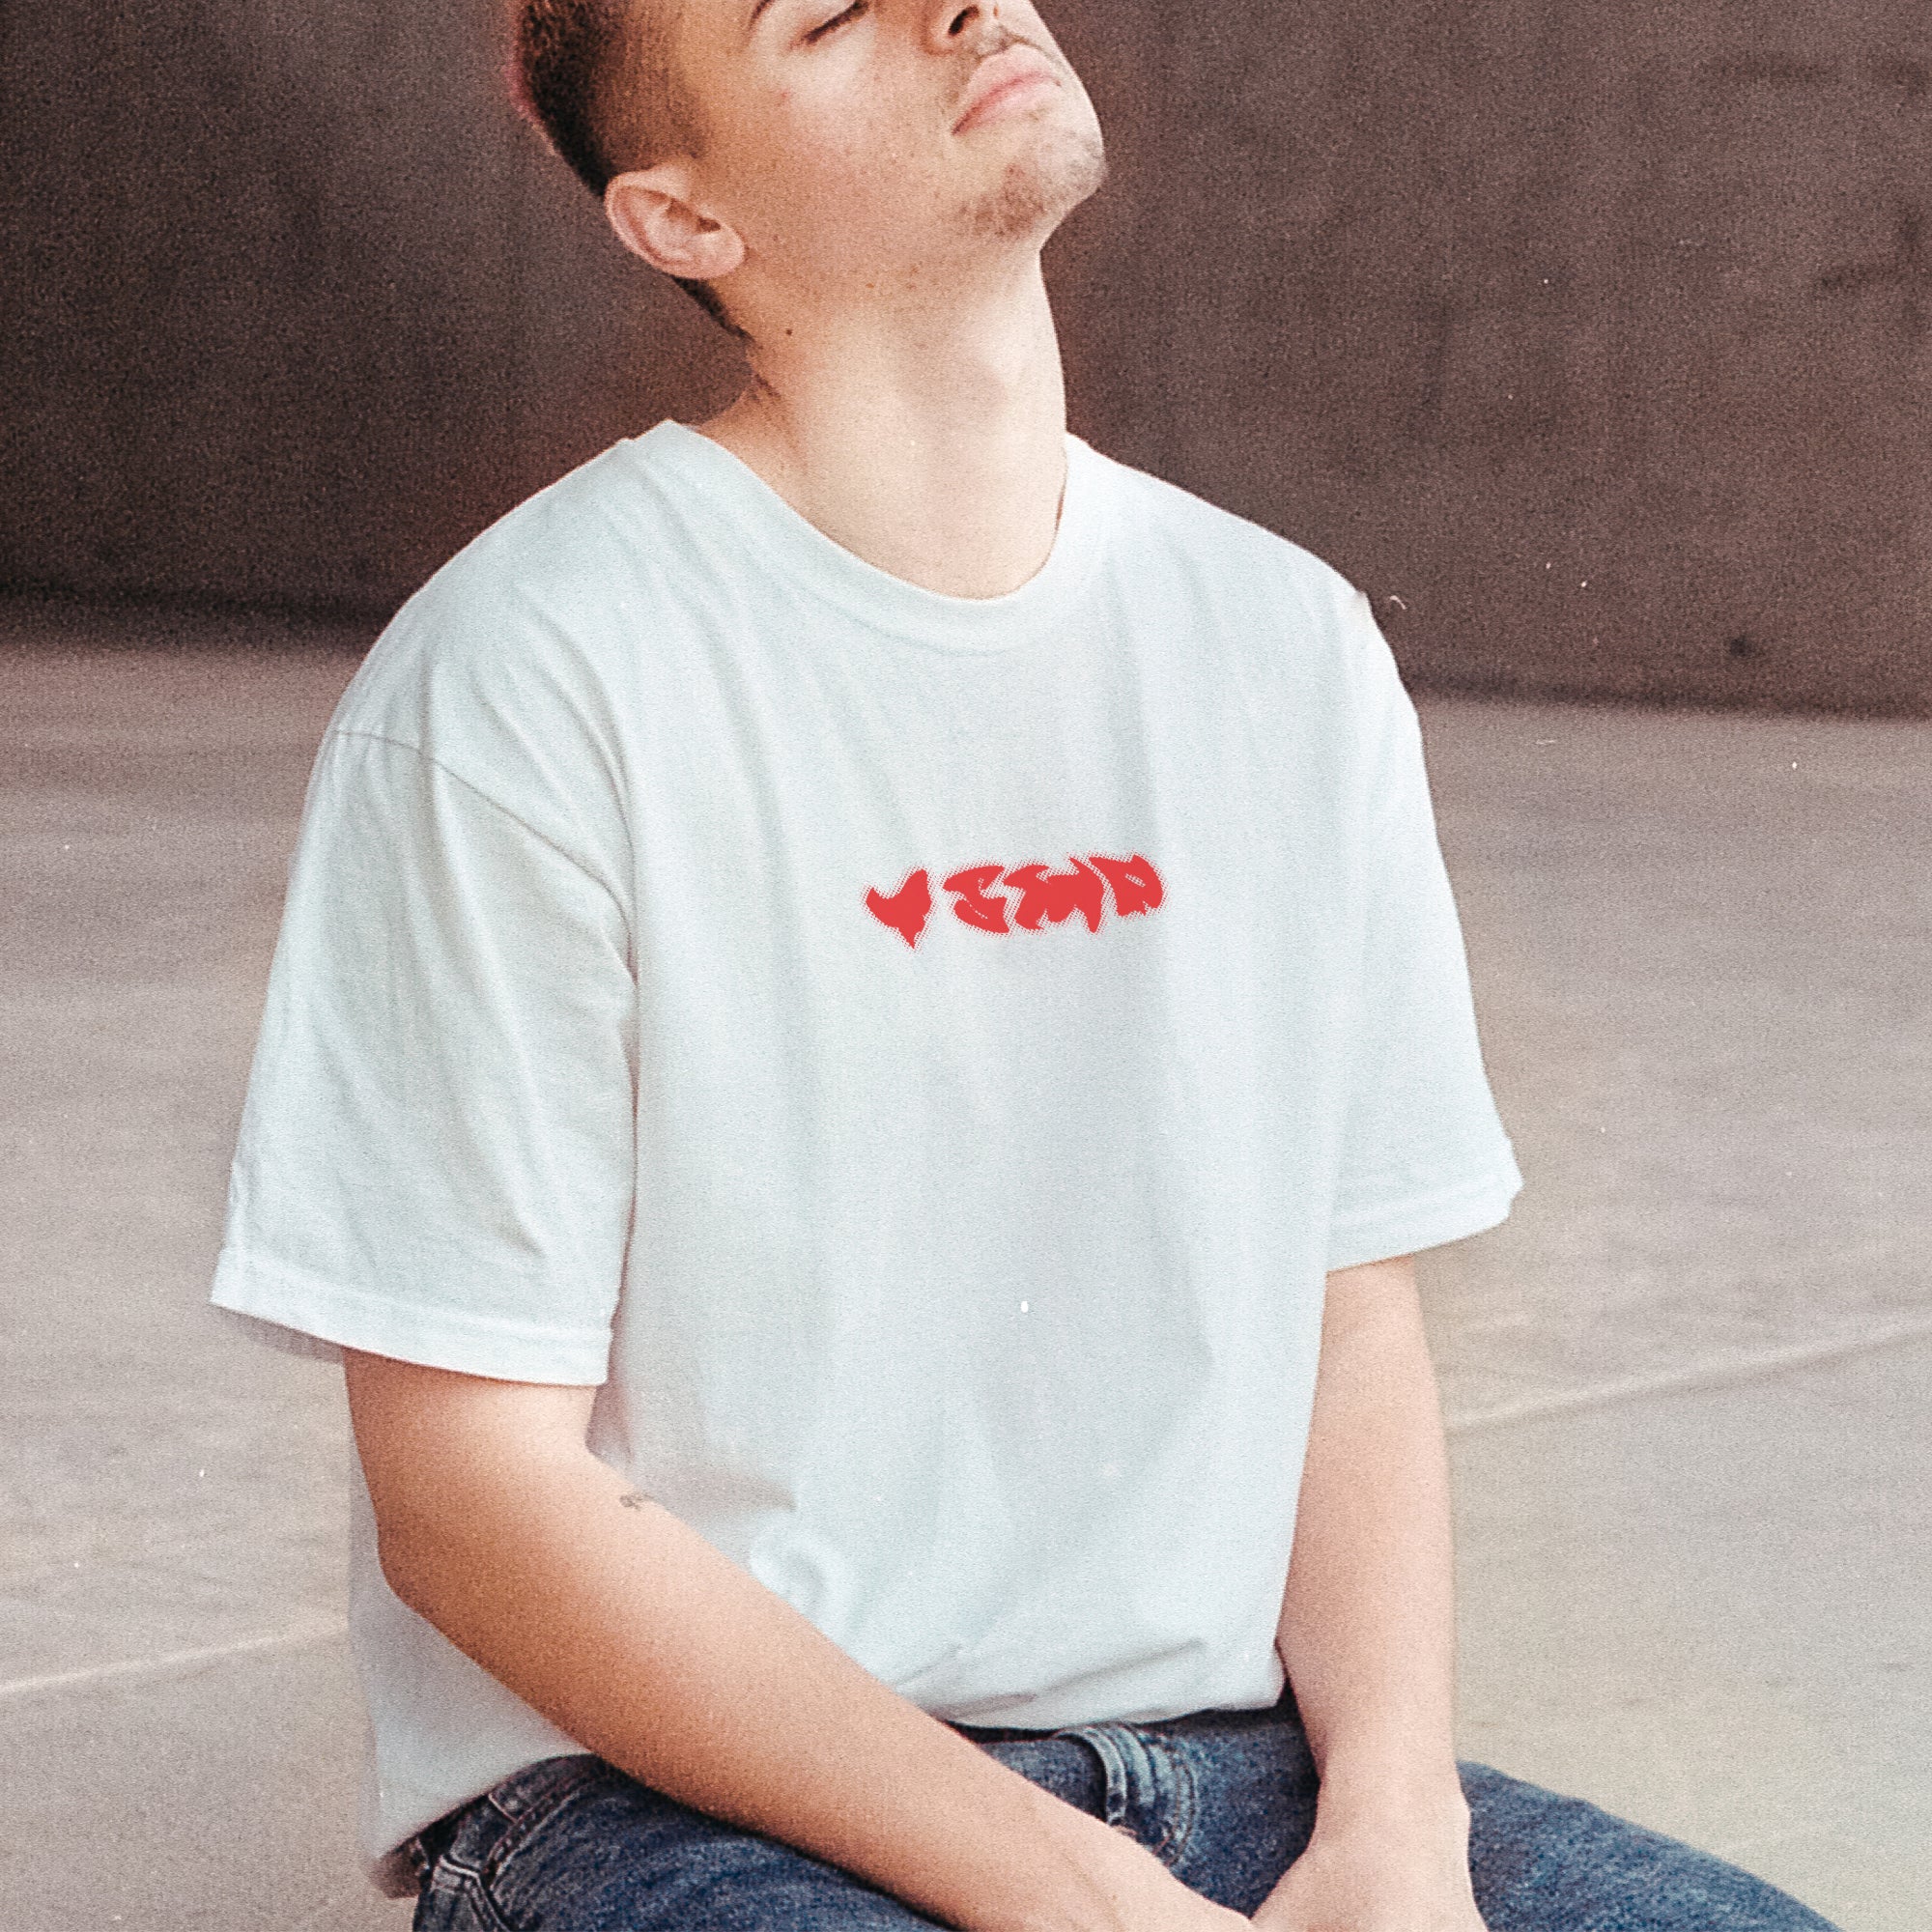 daniel sabater ✶ camiseta "YSMP"